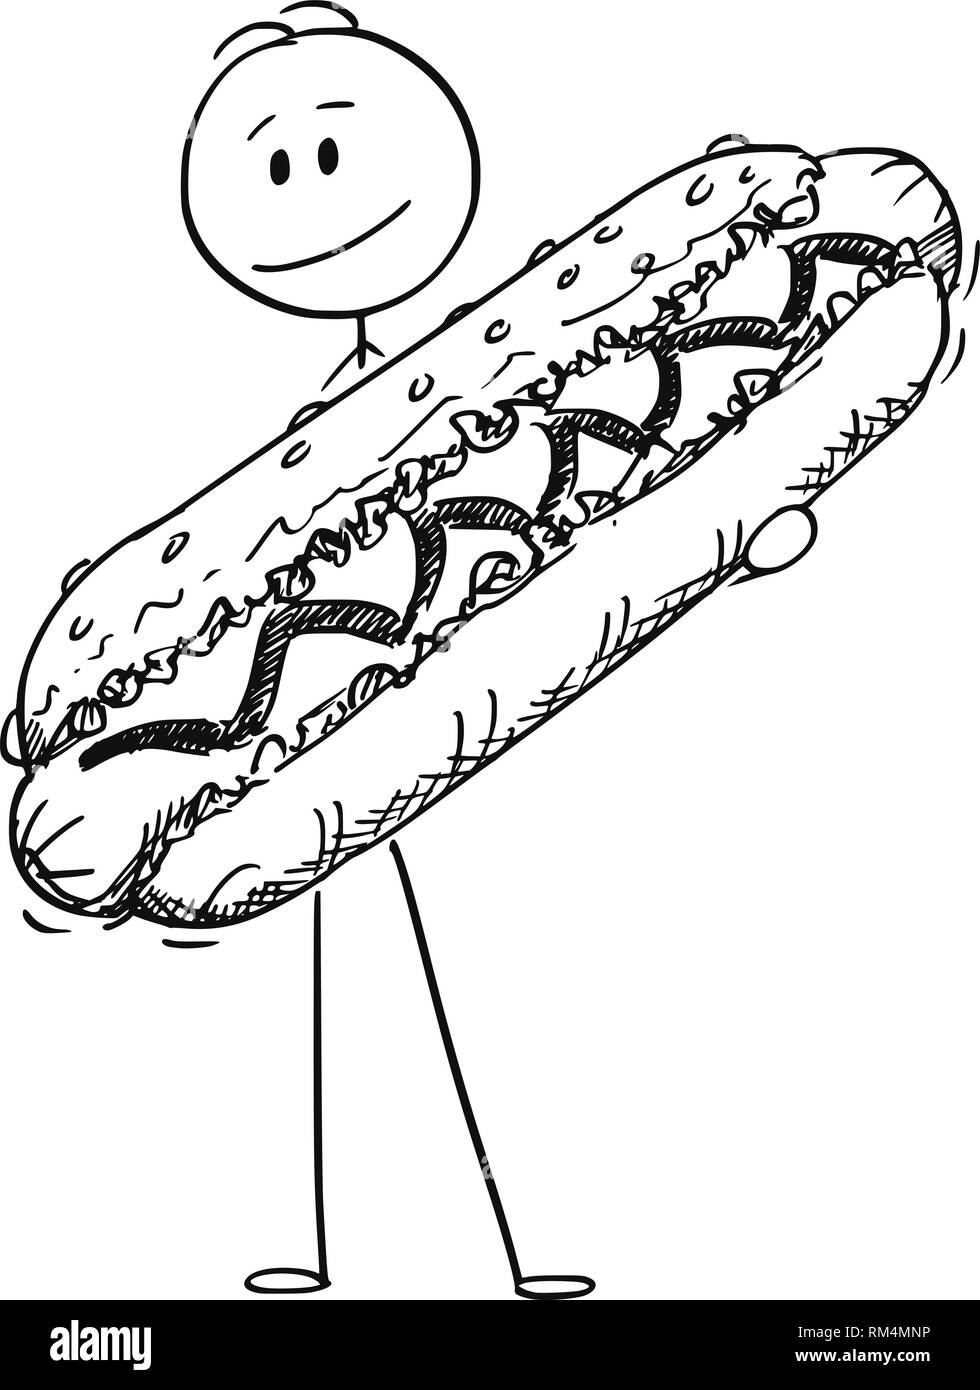 Cartoon of Smiling Man Holding Big Hot Dog Stock Vector